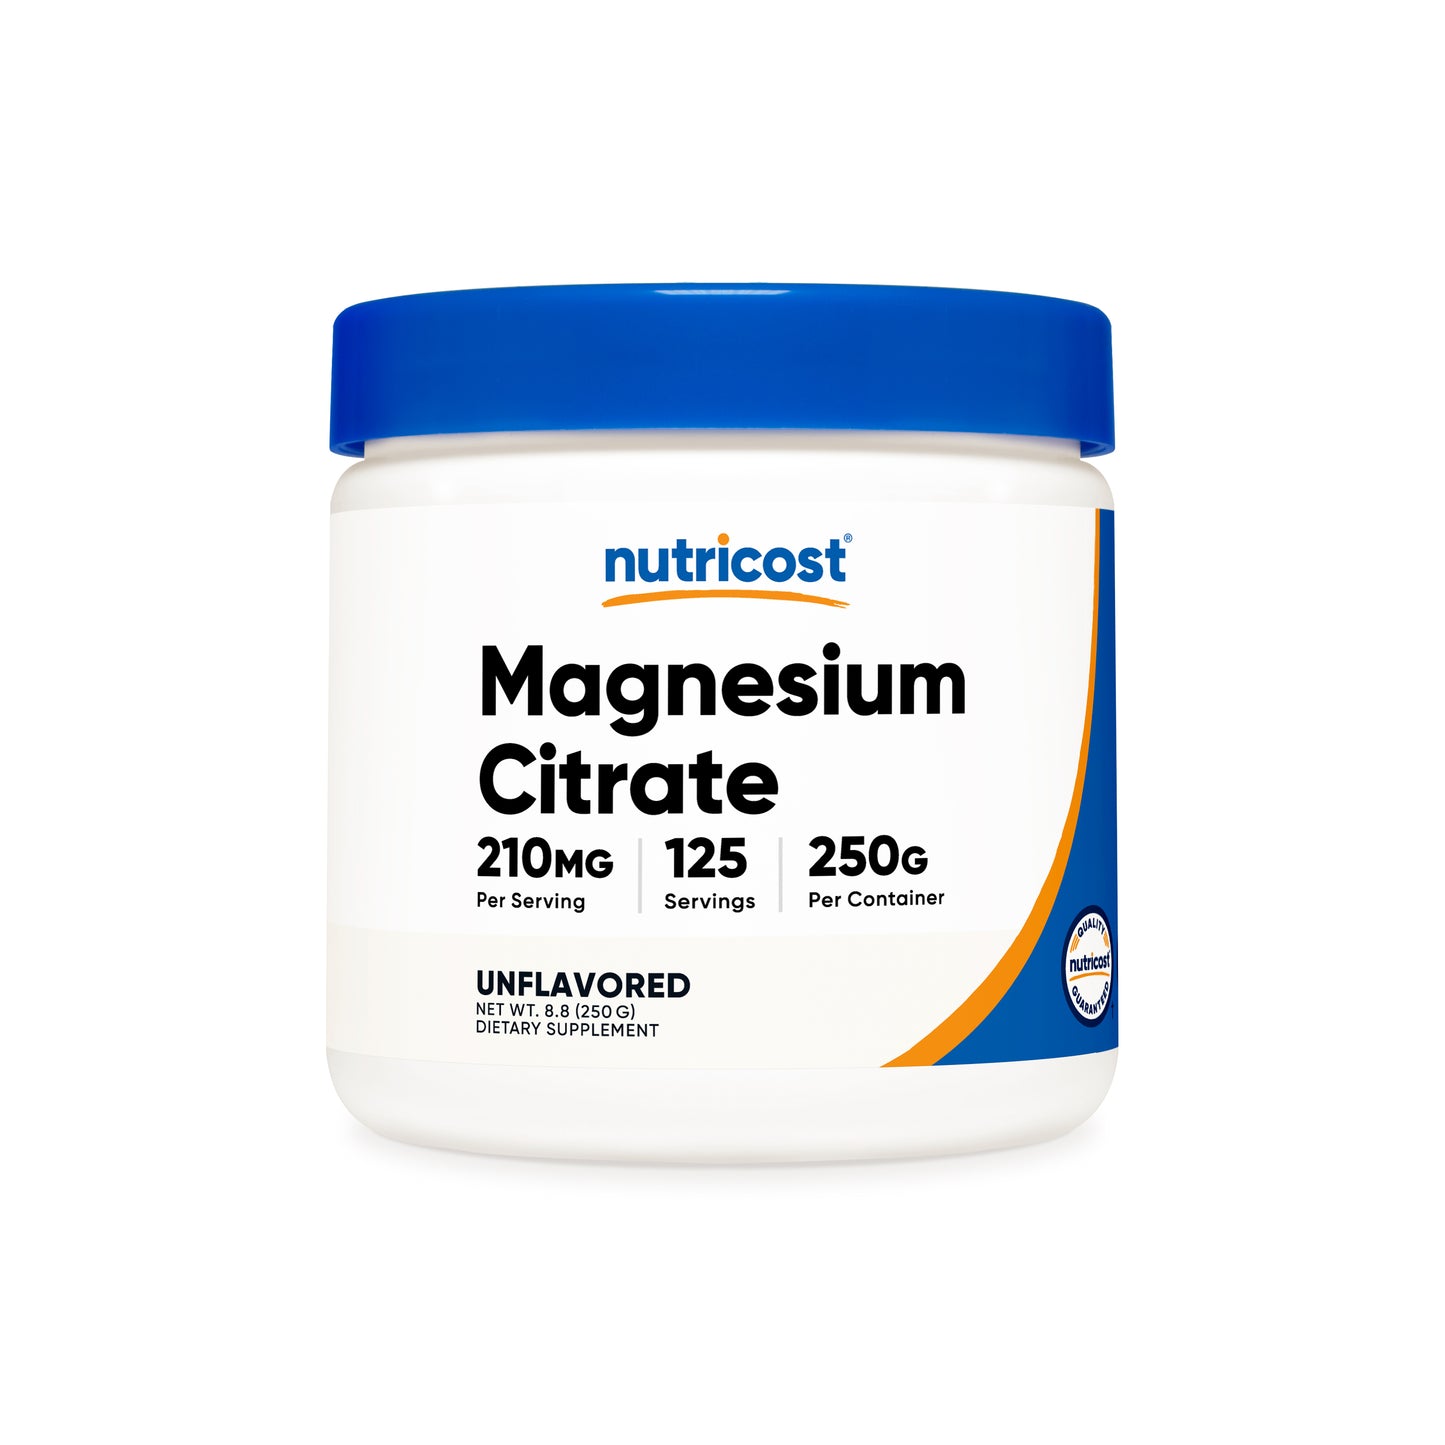 Nutricost Magnesium Citrate Powder